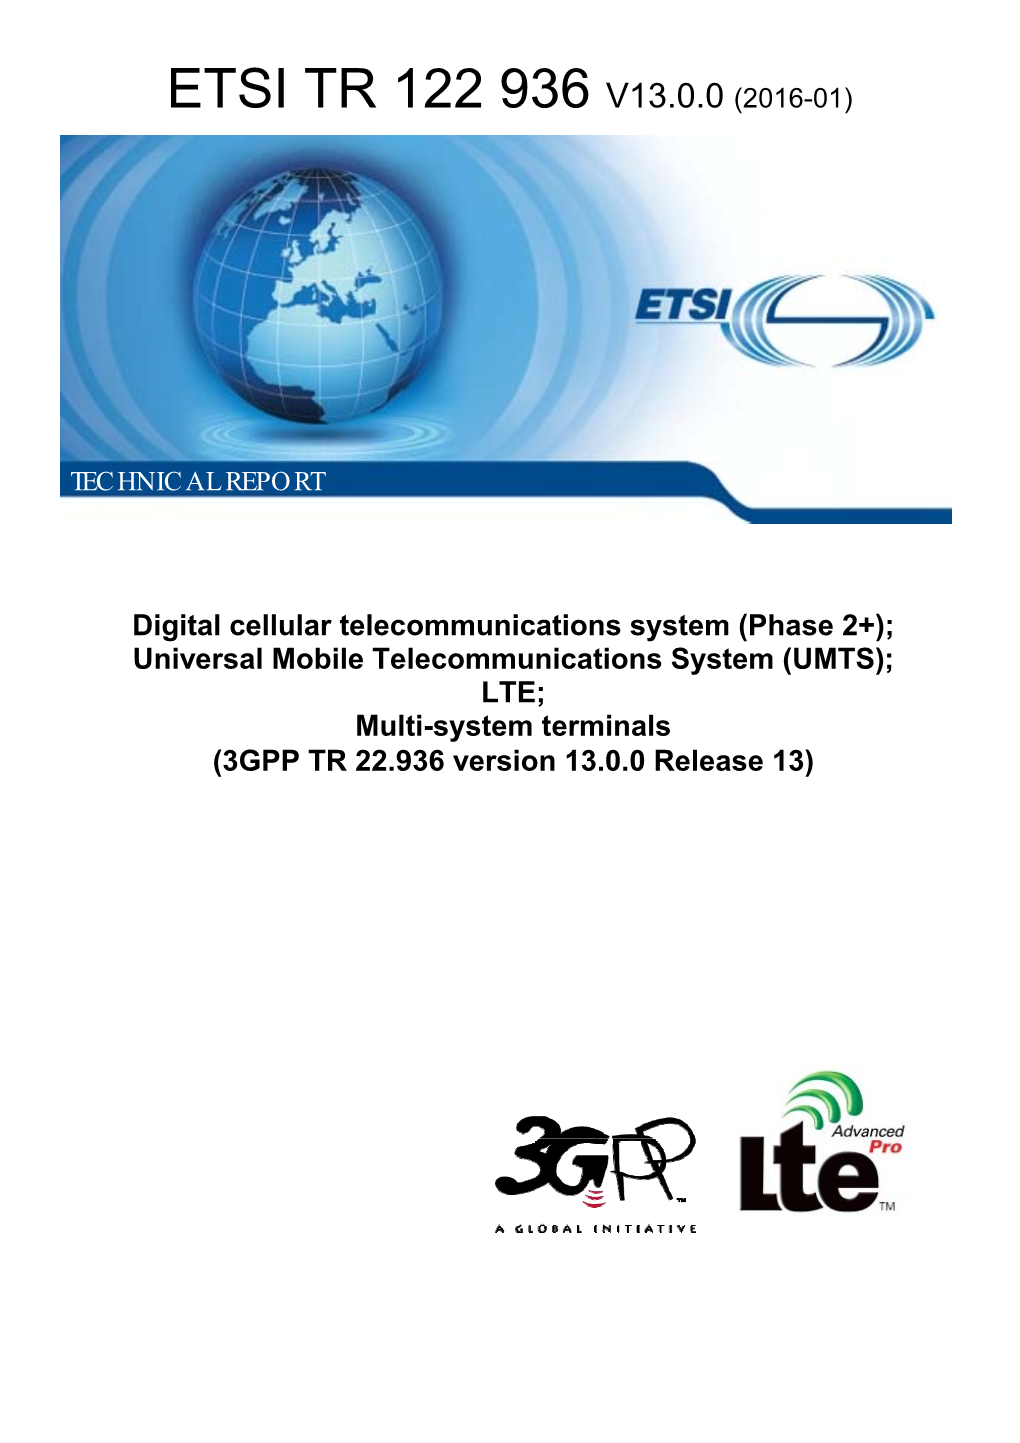 UMTS); LTE; Multulti-System Terminals (3GPP TR 22.9.936 Version 13.0.0 Release 13)